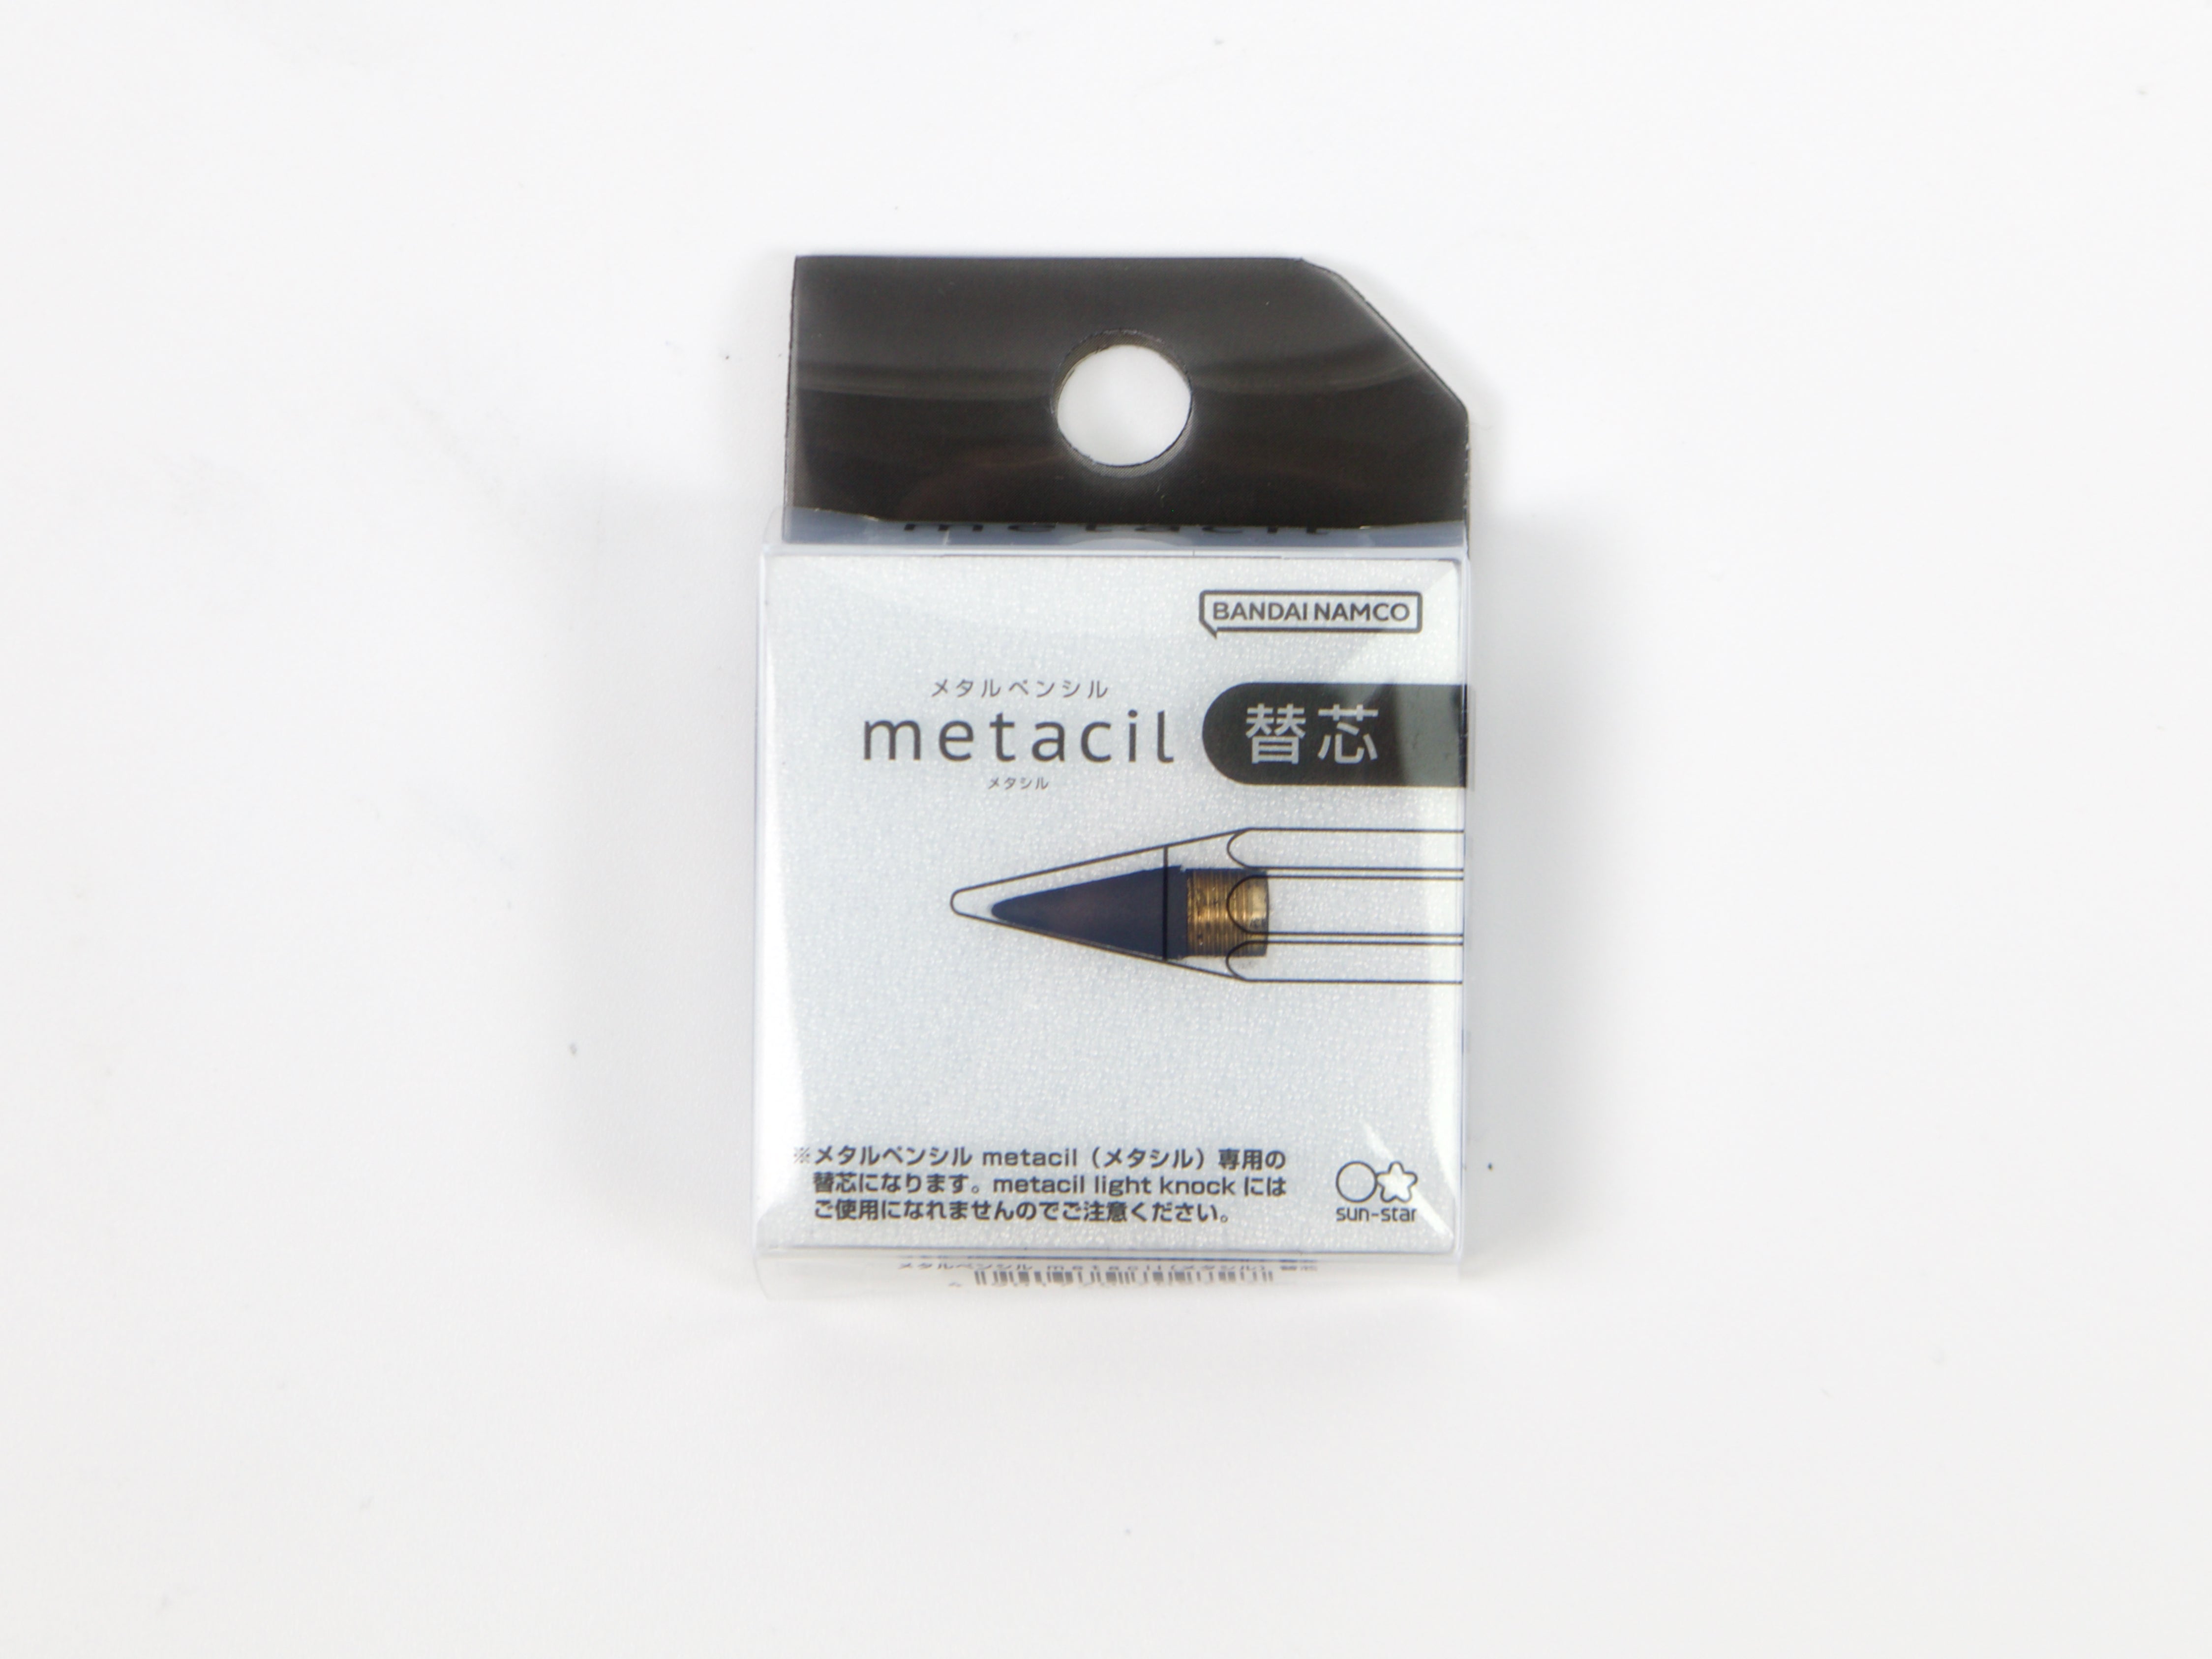 Sun-Star Metacil Metal Pencil - Metallic Gray